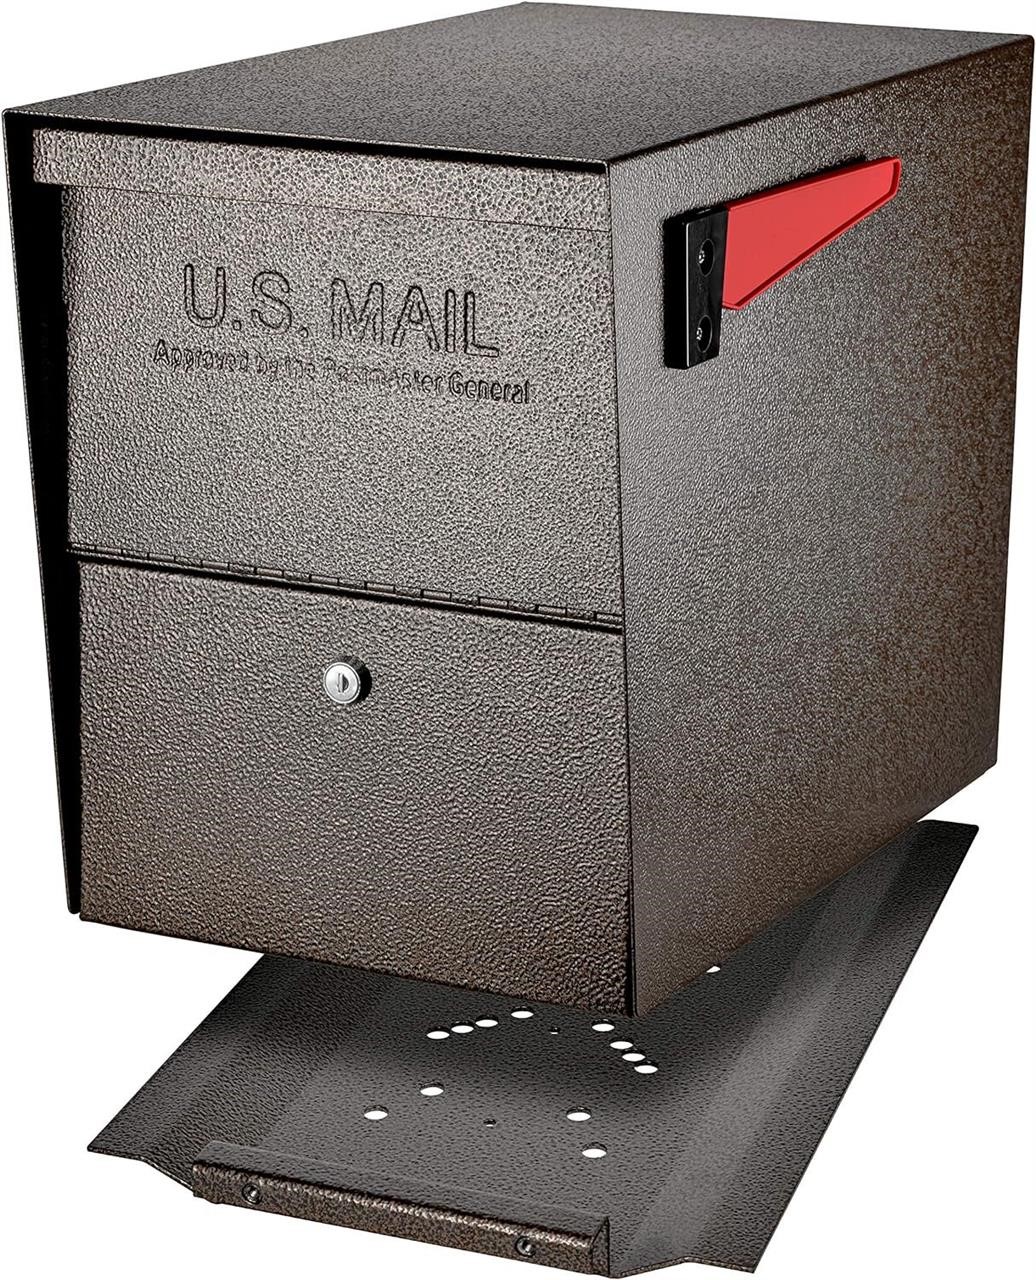 Mail Boss Security Mailbox  Bronze 7208